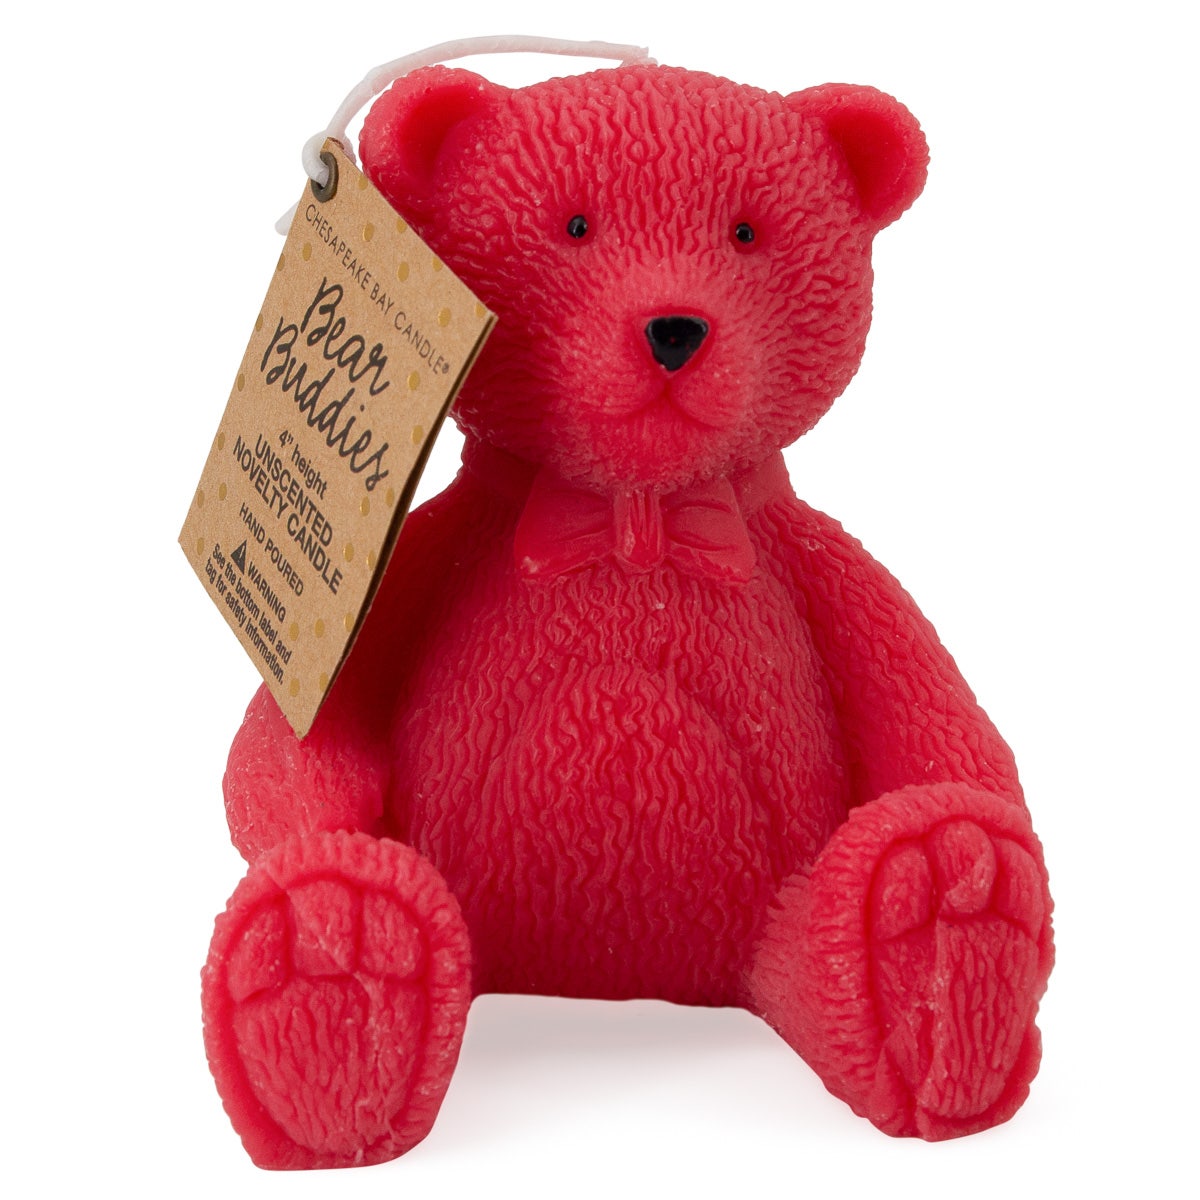 Chesapeake Bay Bear Buddies Teddy Bear 9oz Candle Unscented Decorative, Size: 4.5, Red